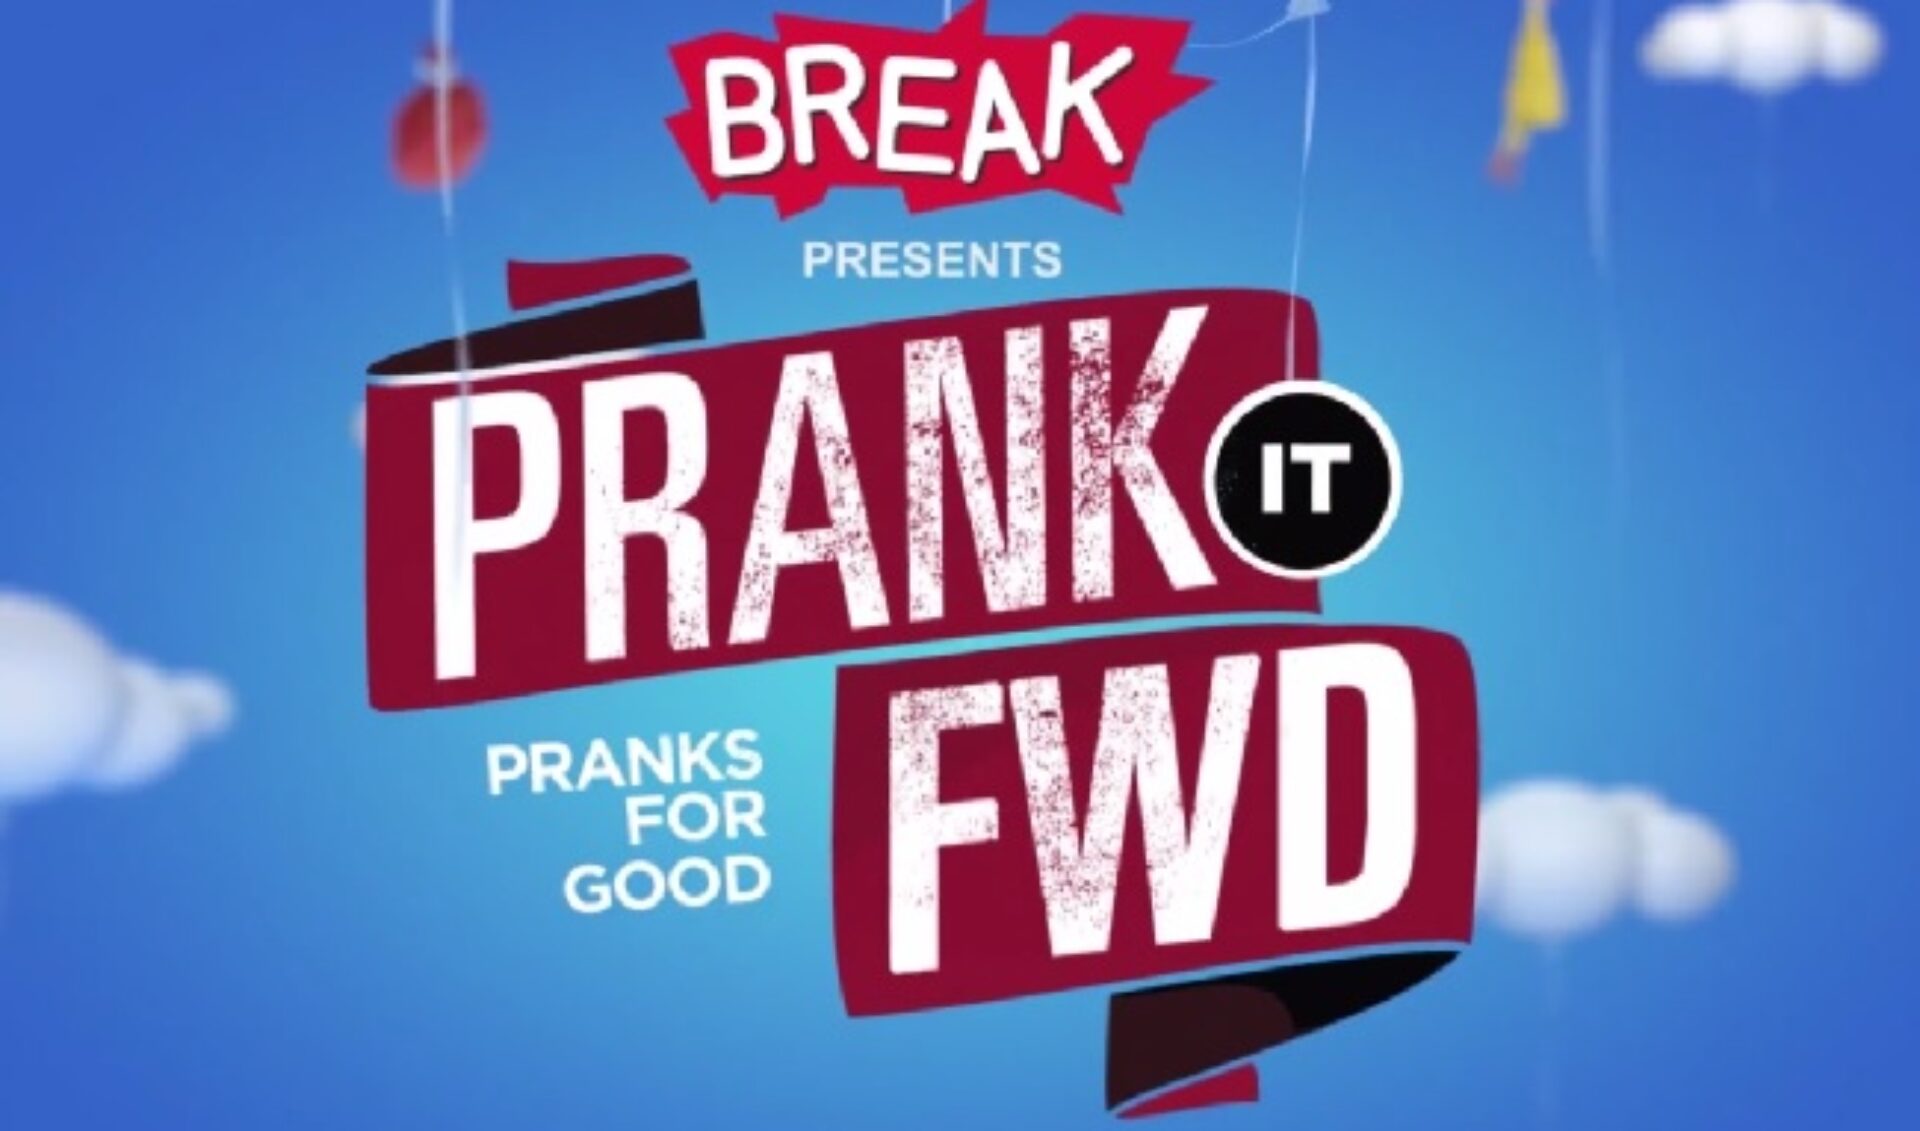 ‘Prank it FWD’ Returns to Break.com This November